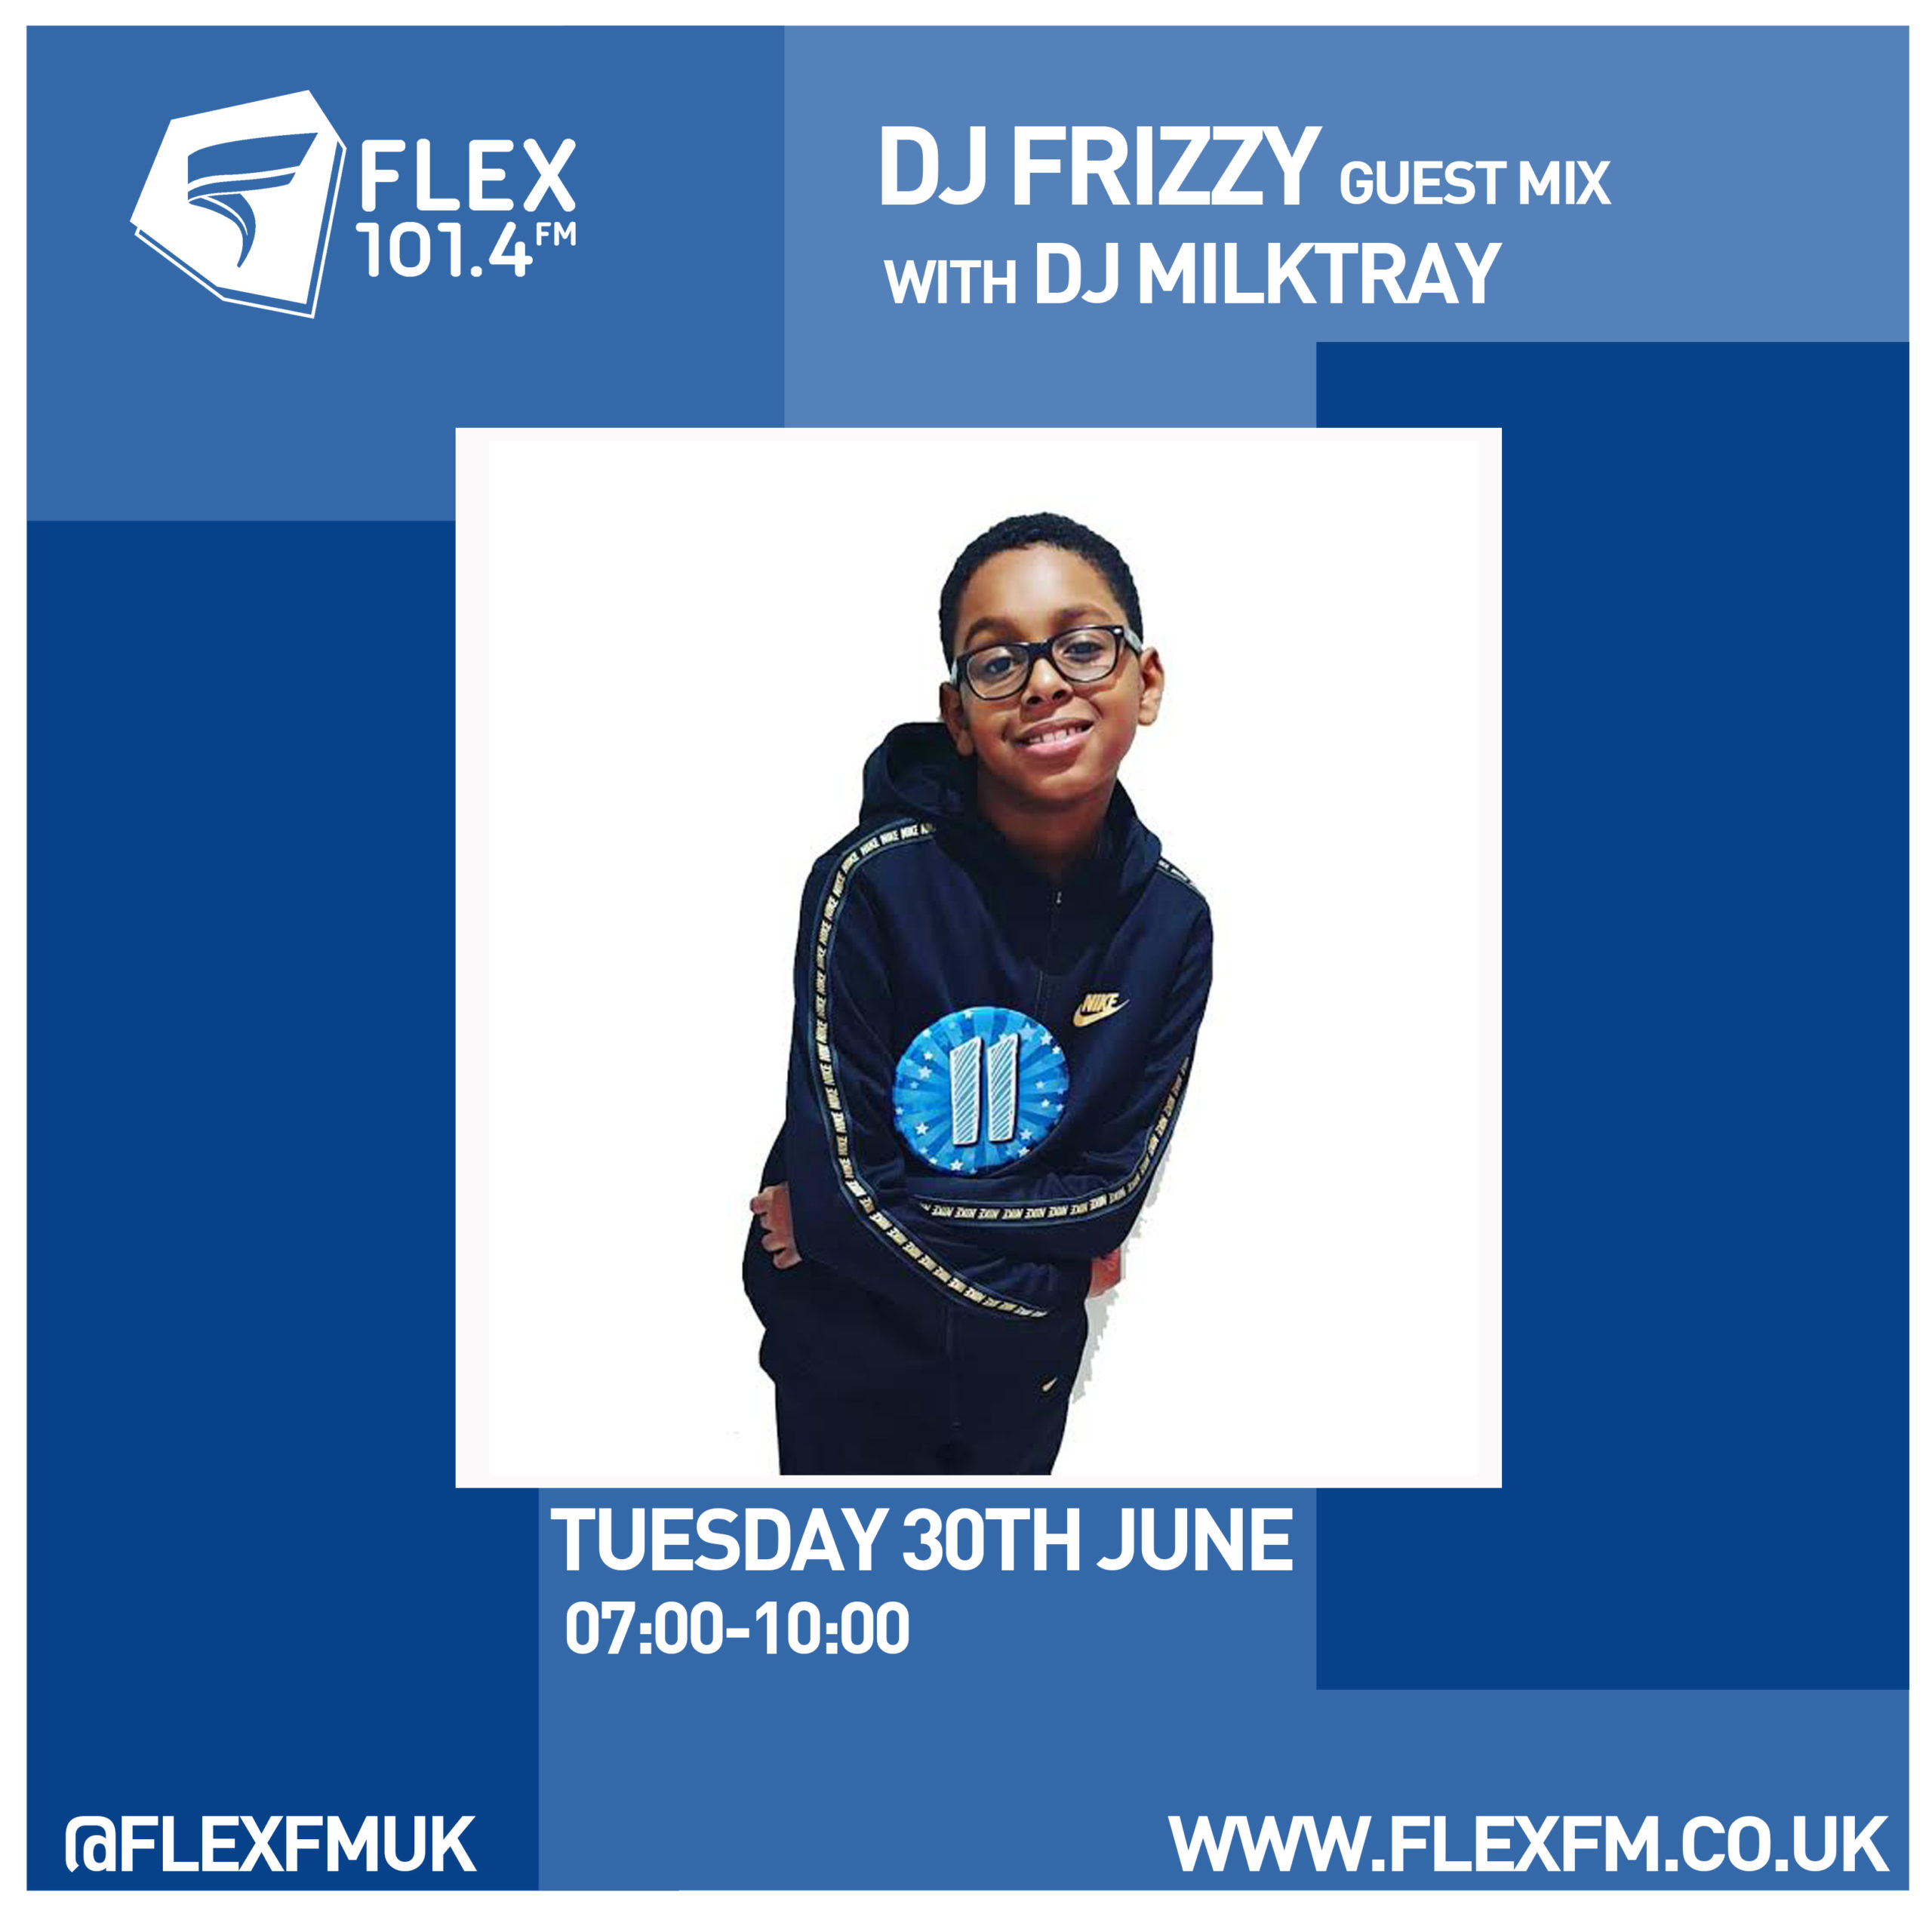 Dj Frizzy guest mix with Dj Milktray – Tuesday 30th June – 07:00-10:00